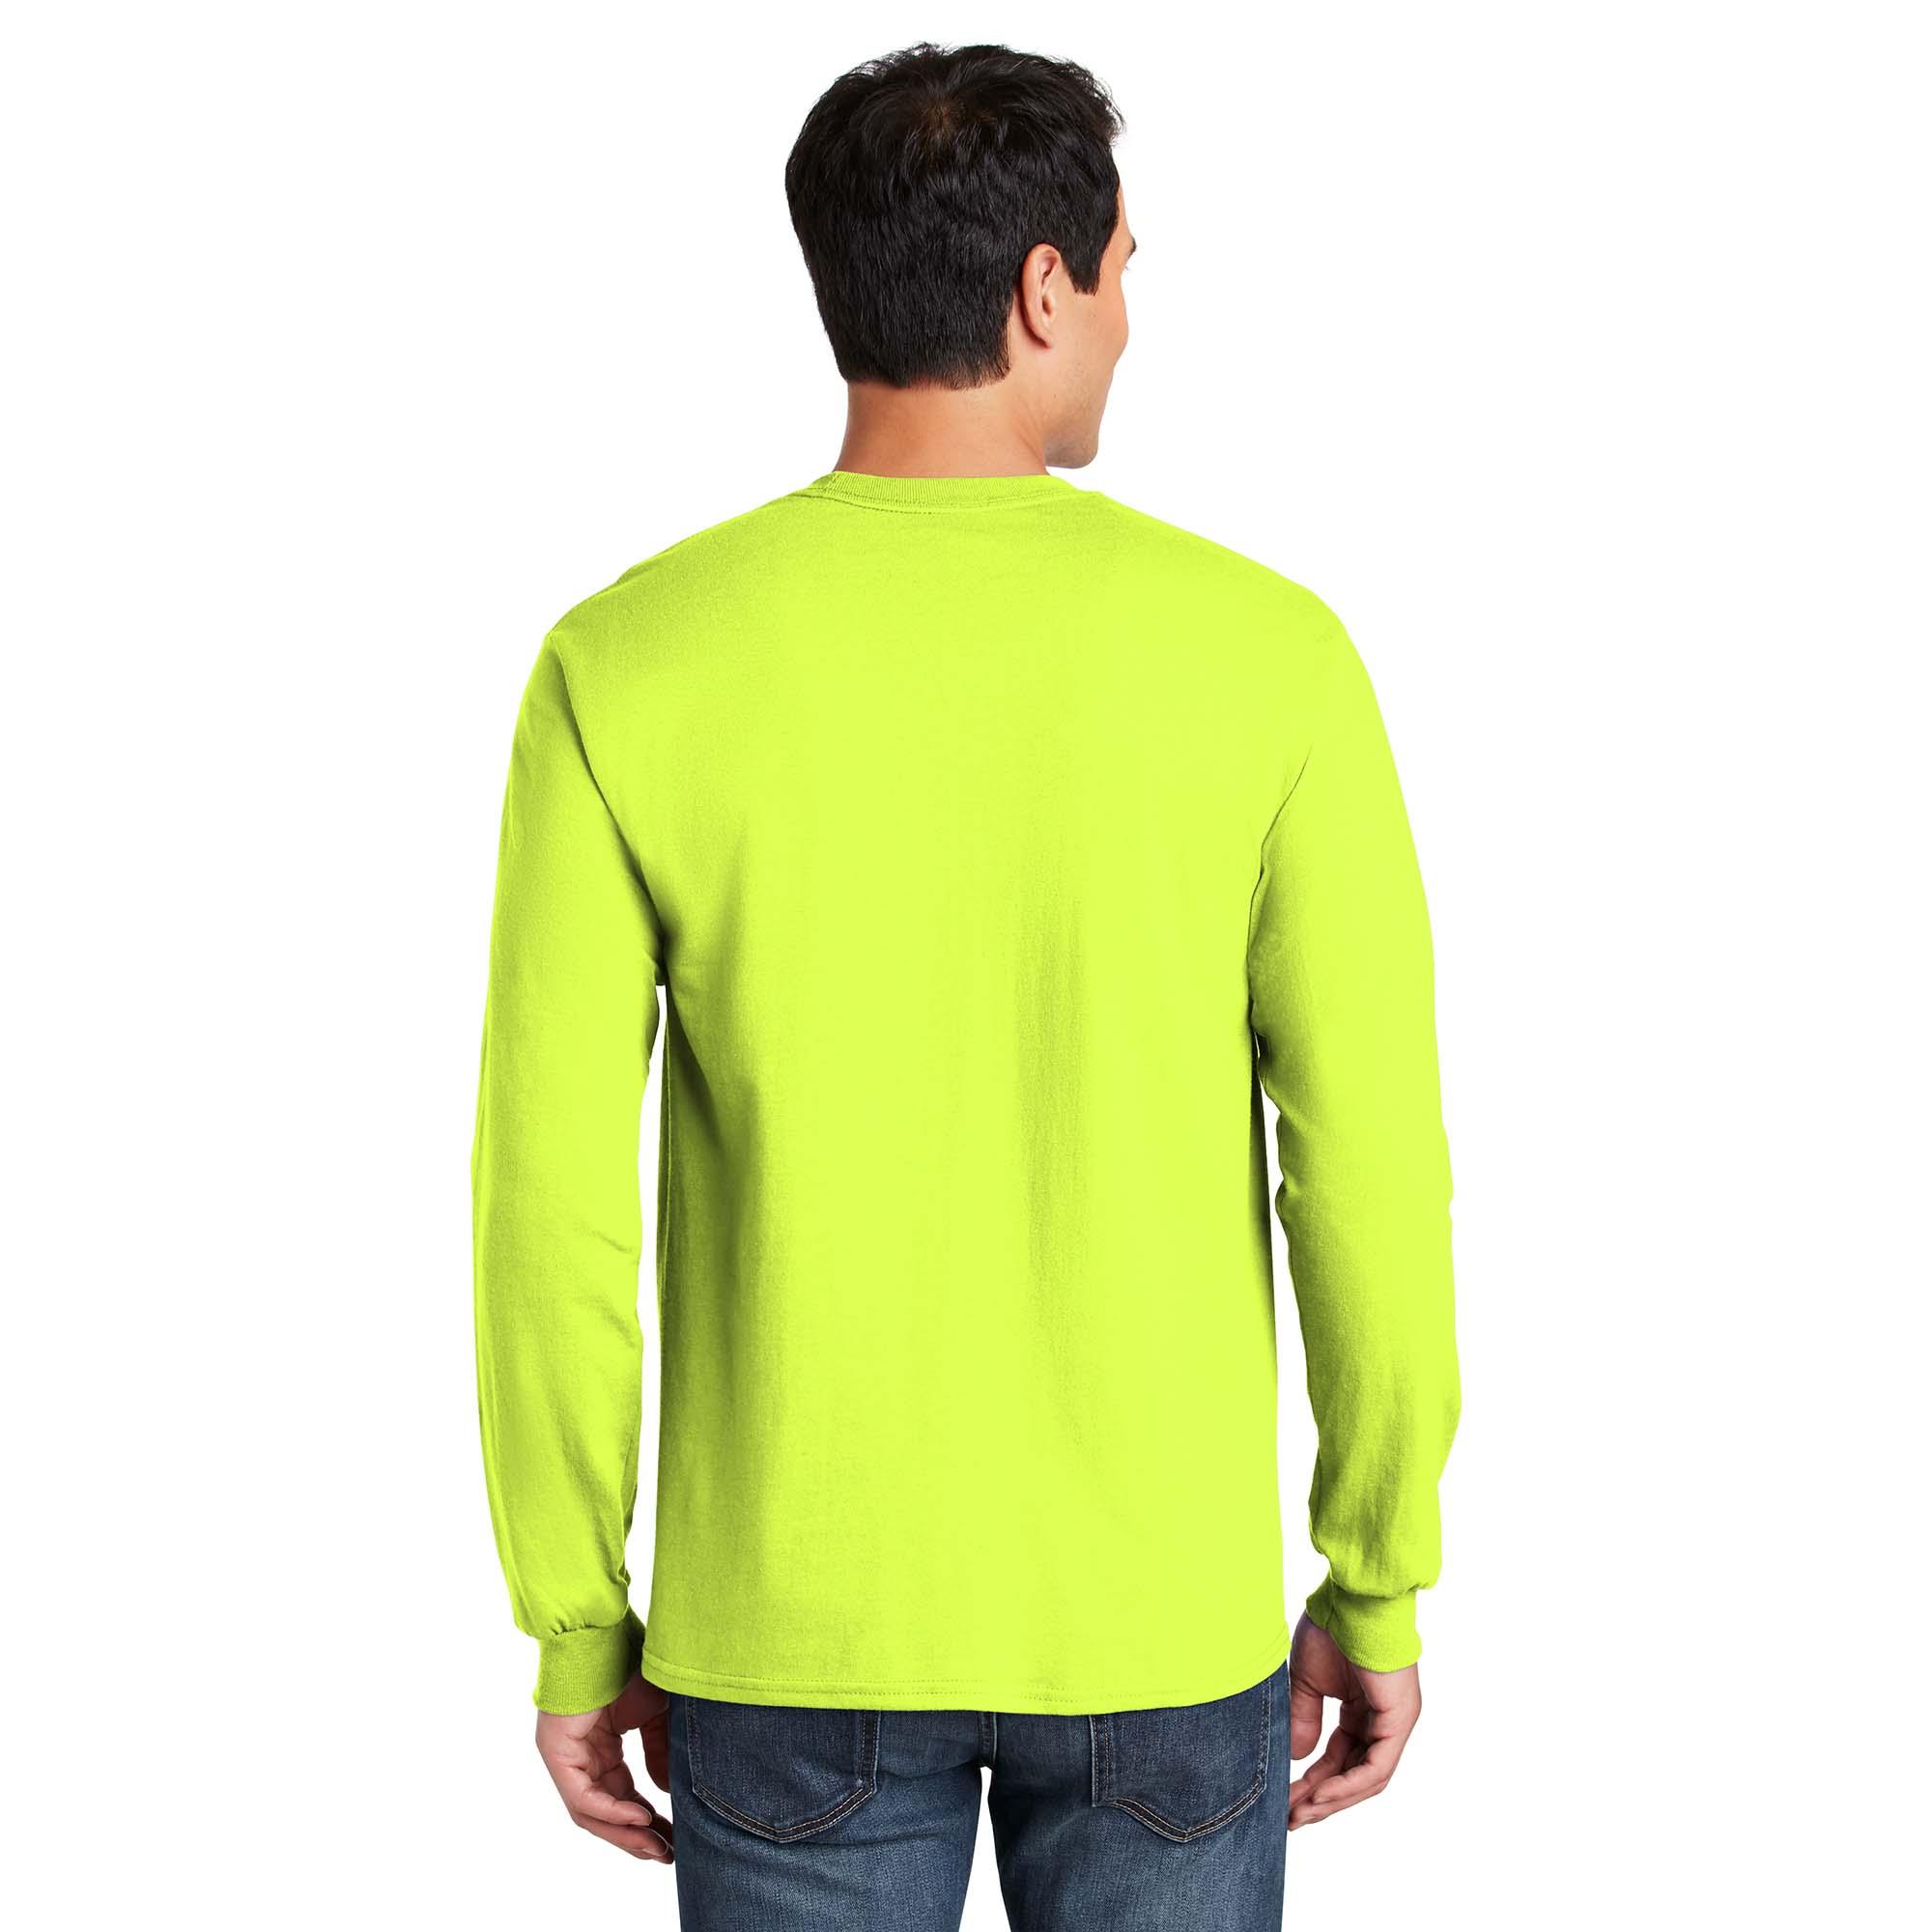 G2400 Cotton Long Sleeve T-Shirt - Safety Green |